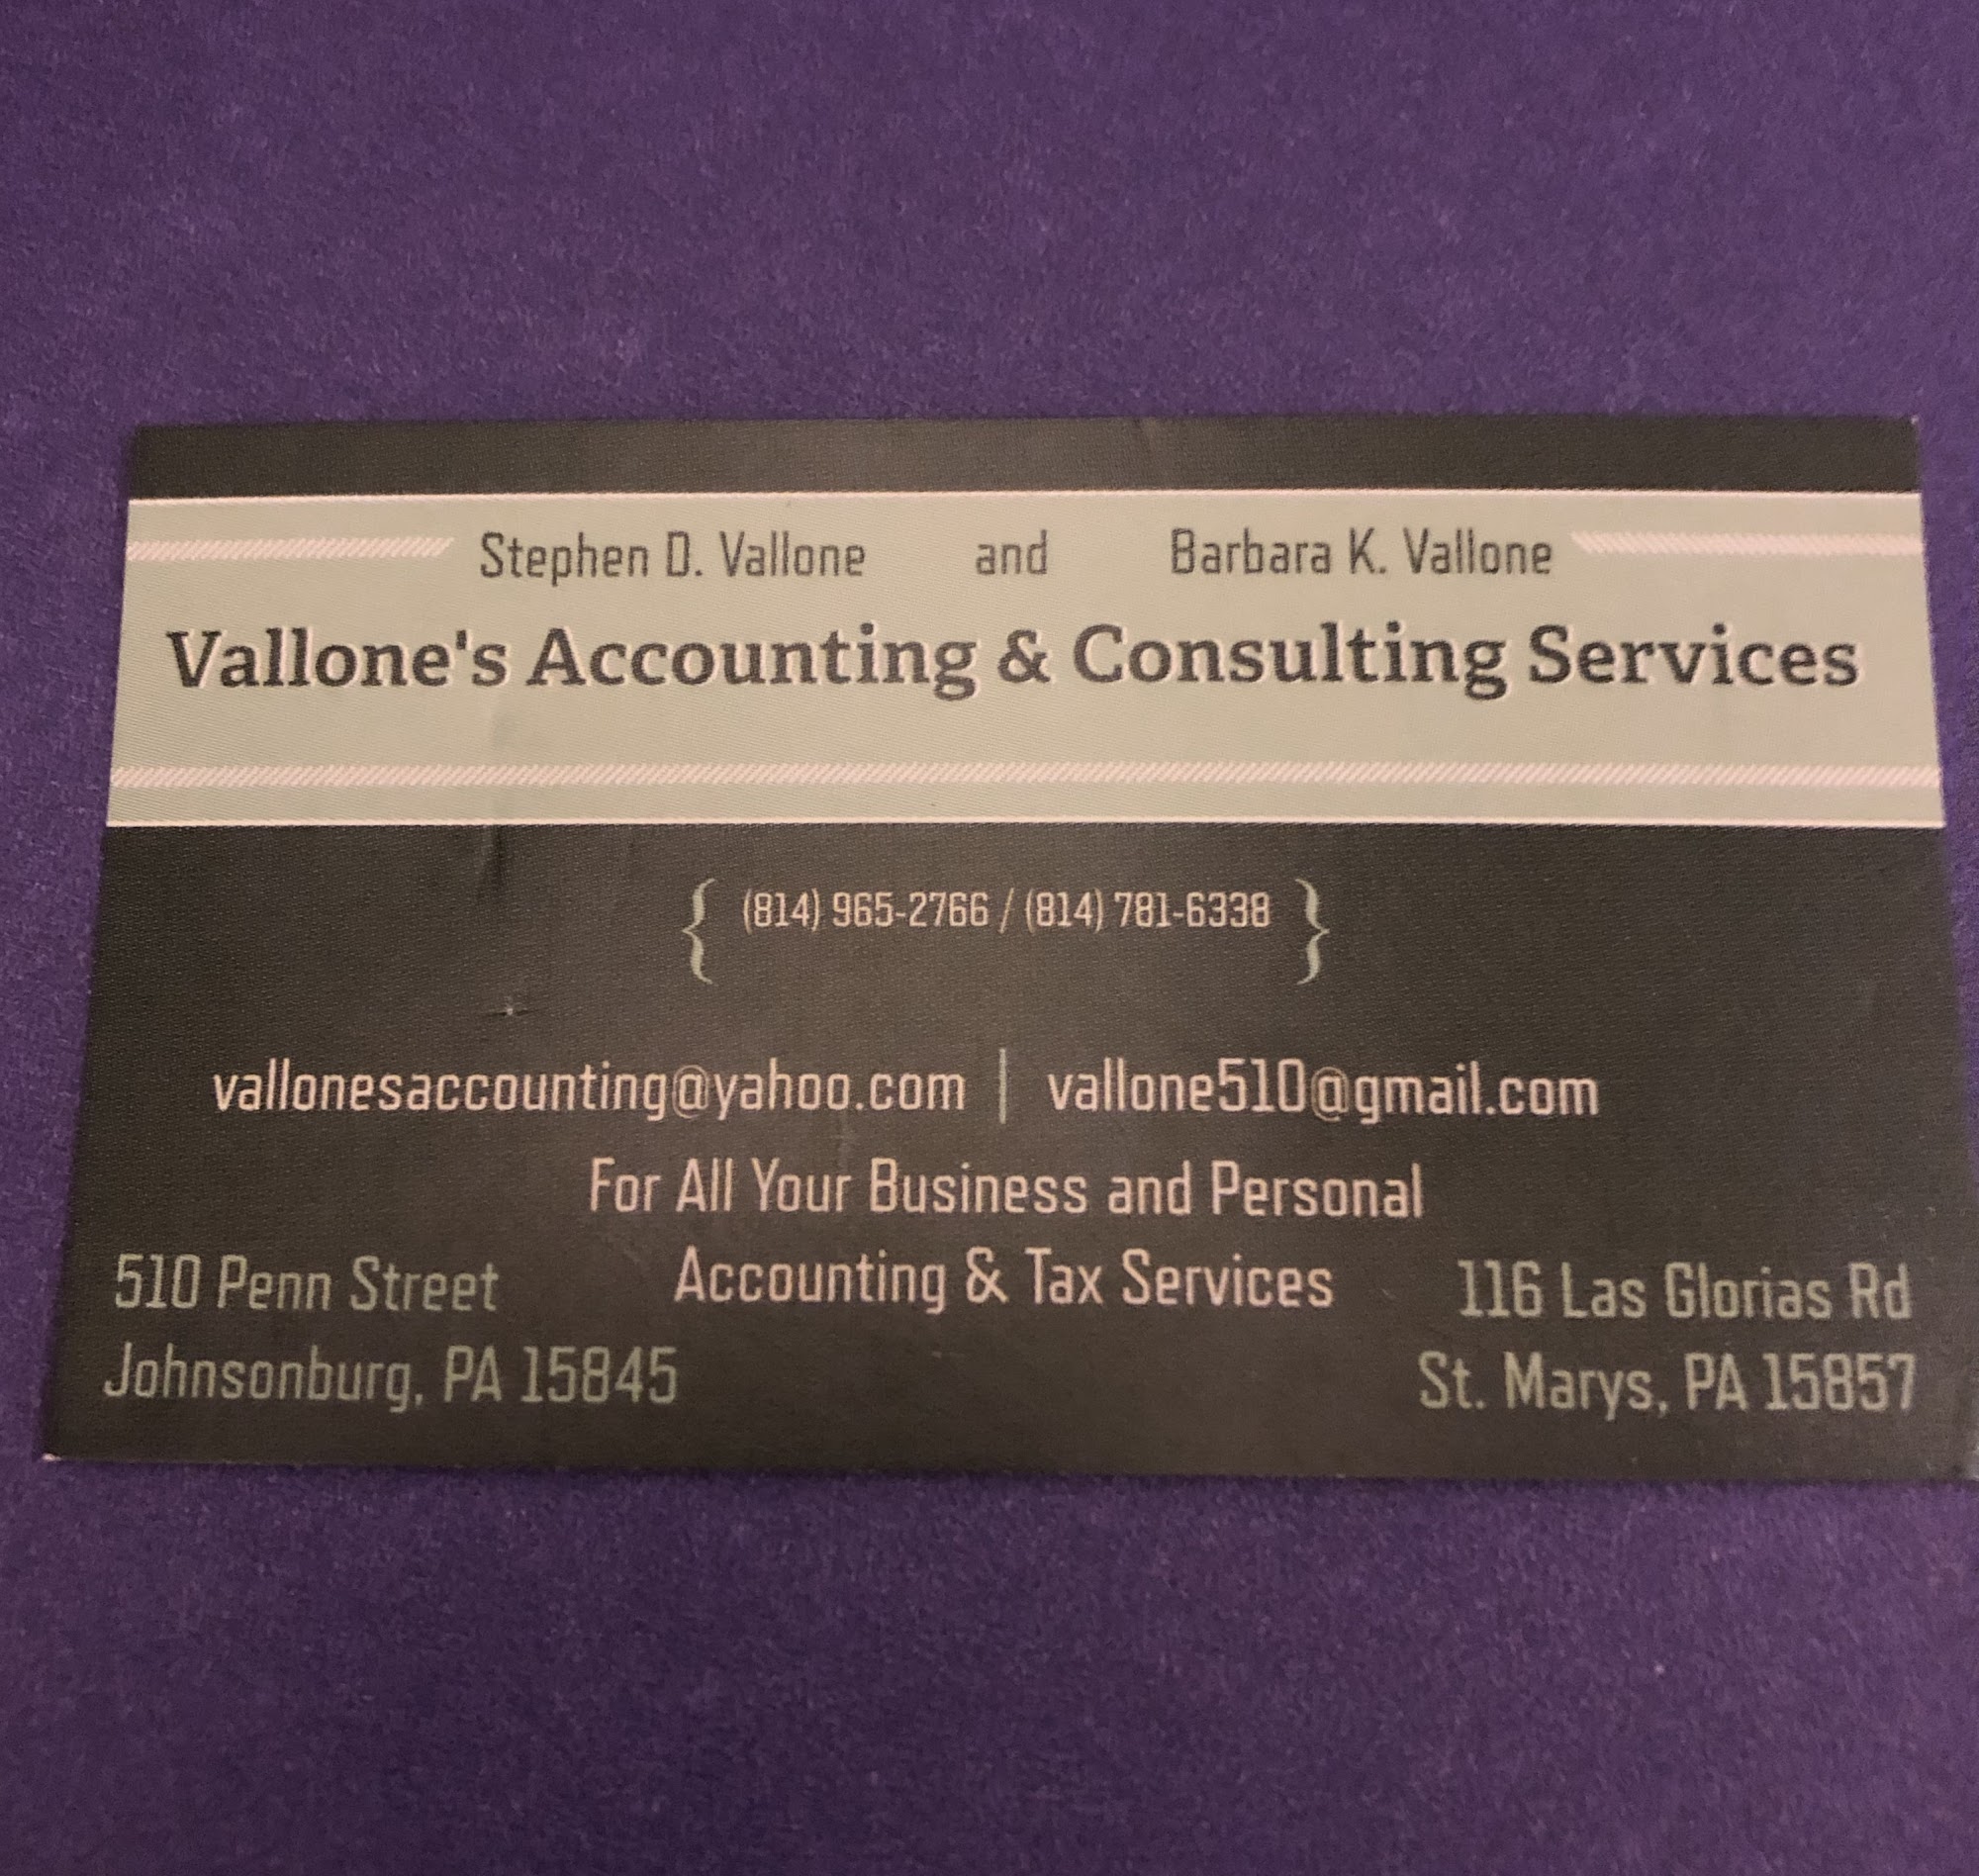 Vallone's Accounting & Consulting Services 510 Penn St, Johnsonburg Pennsylvania 15845